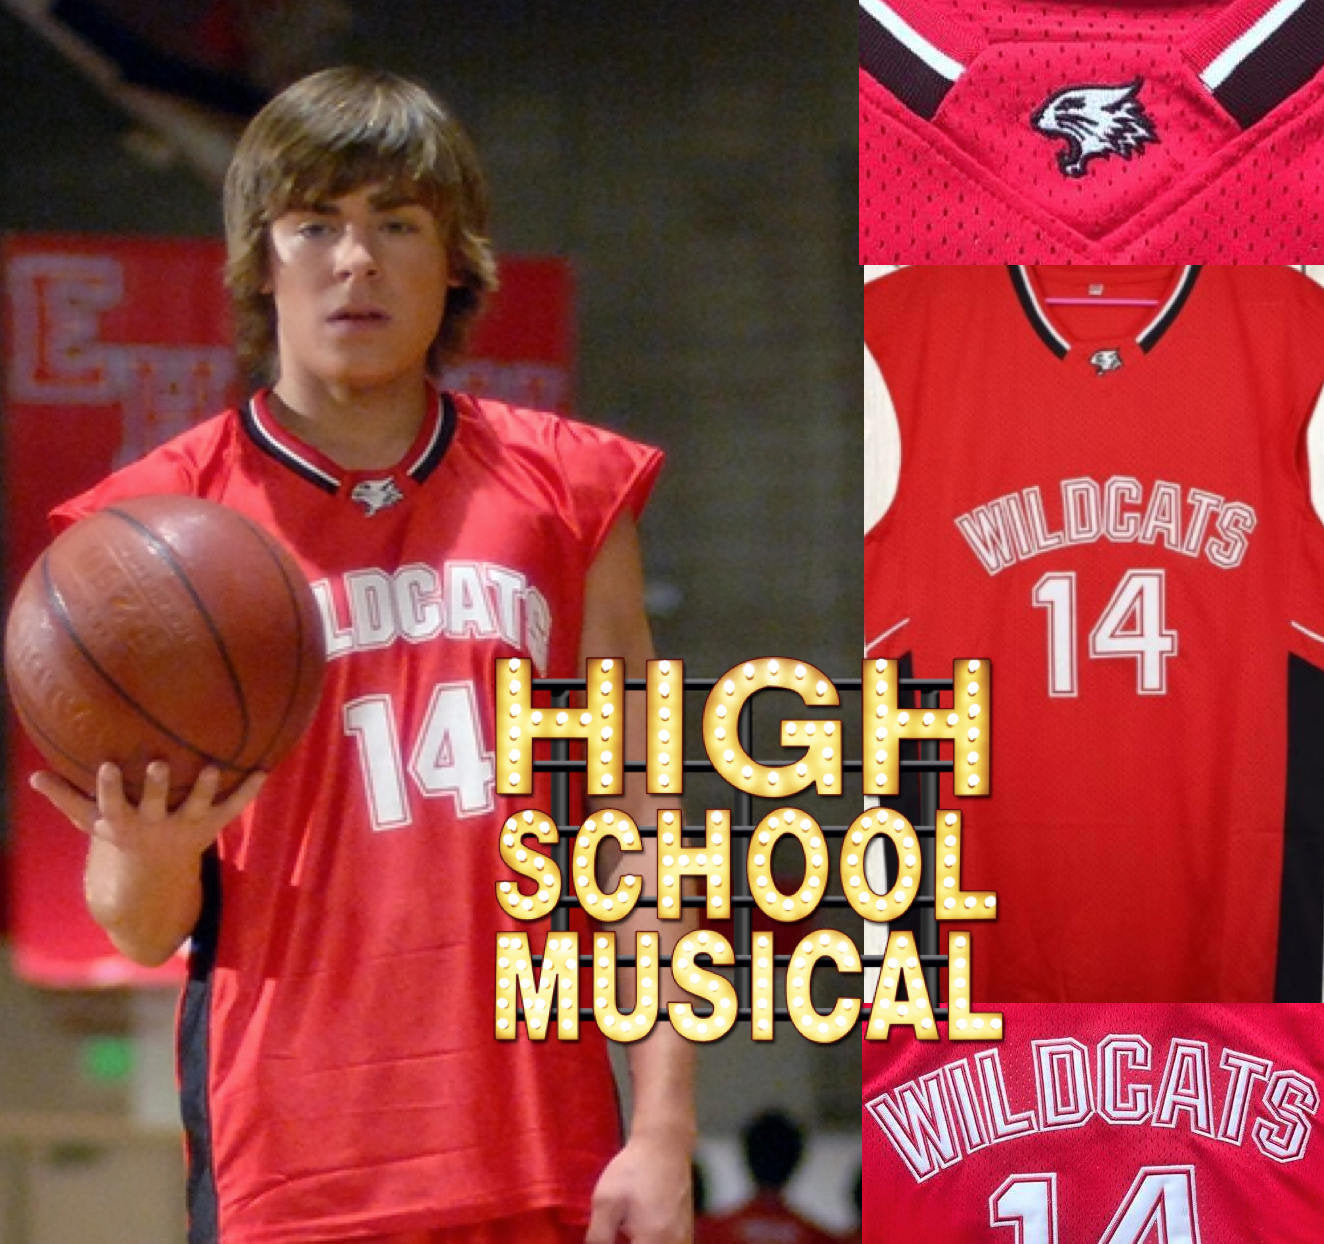 JordansSecretStuff Troy Bolton High School Musical Movie Wildcats #14 Basketball Jersey Custom Throwback Retro Movie Jersey Large